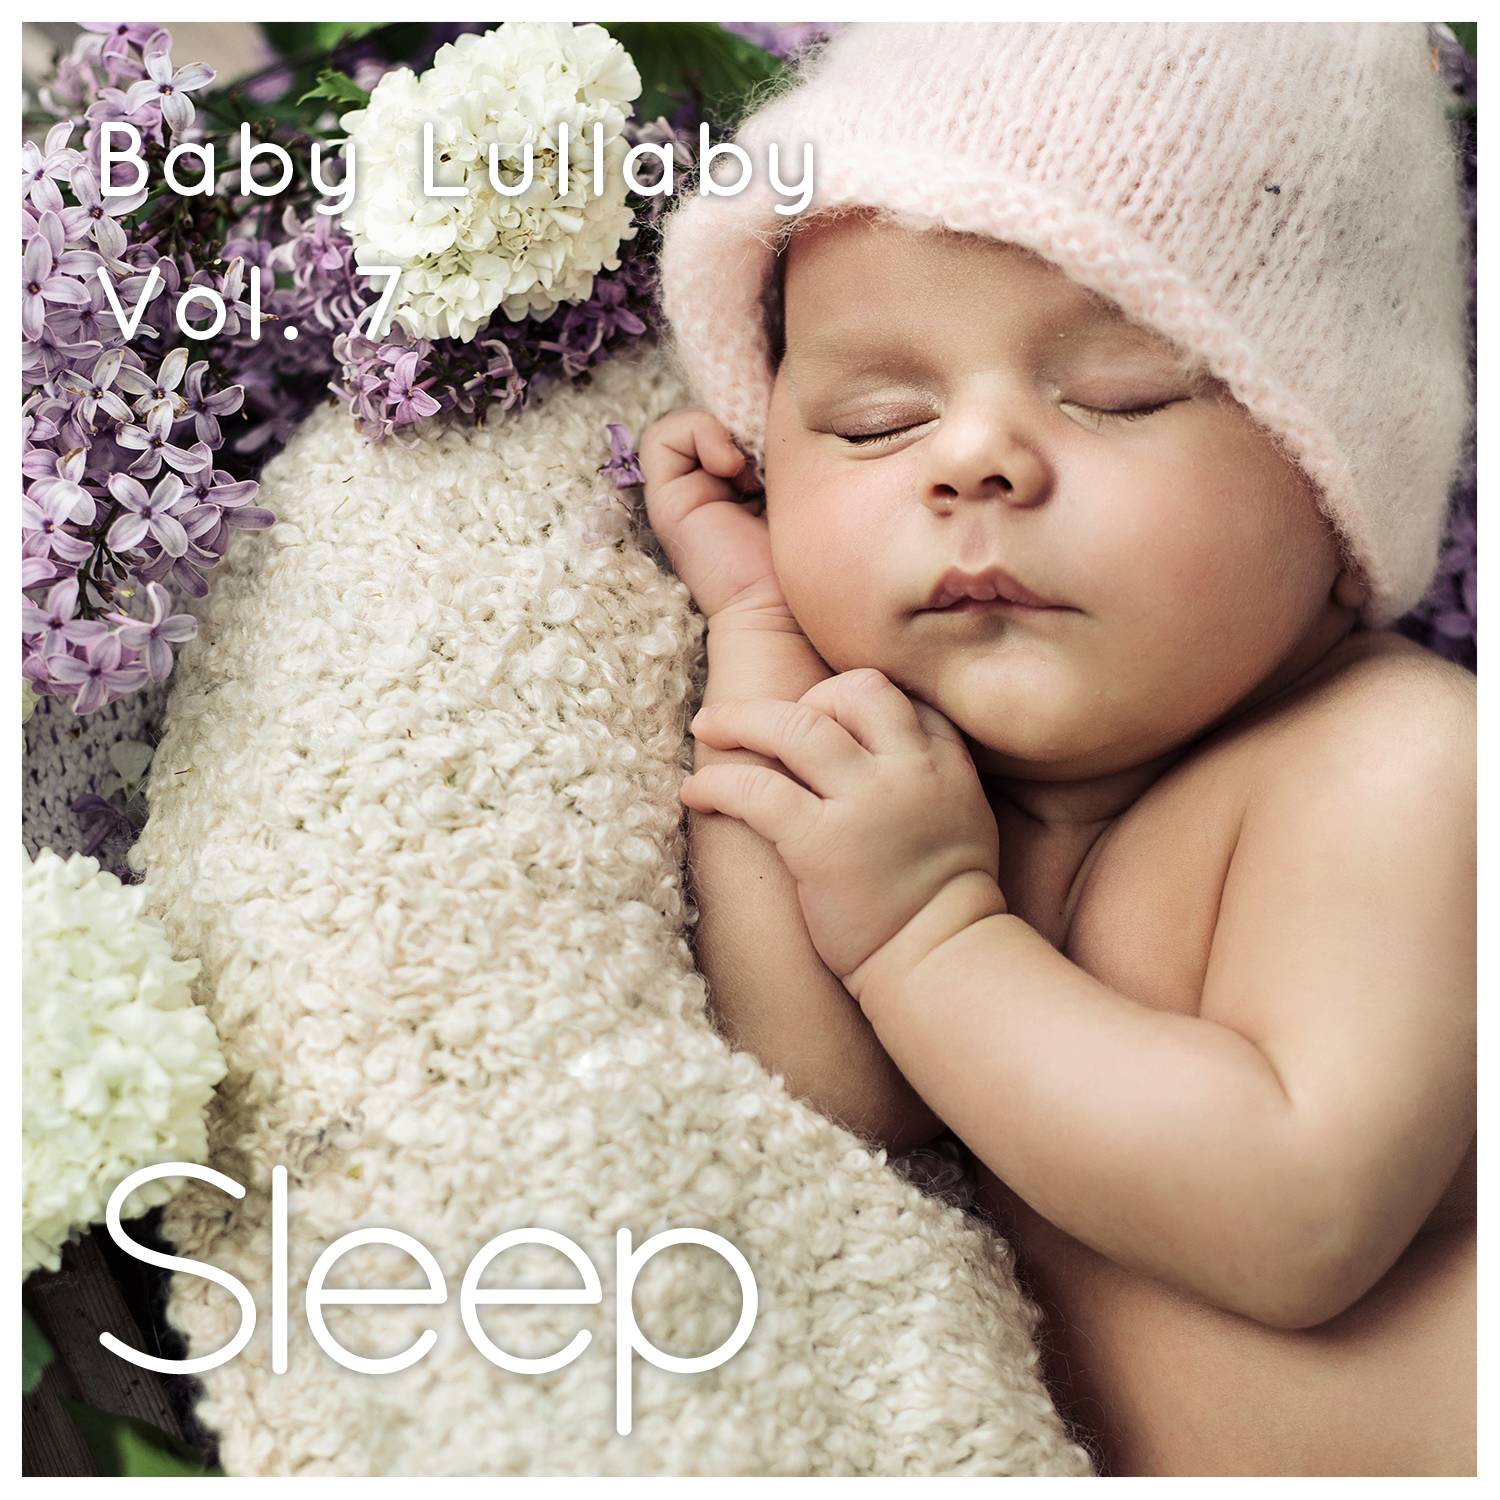 Baby Sleep - The Tumble Dryer Lullaby, Vol. 7